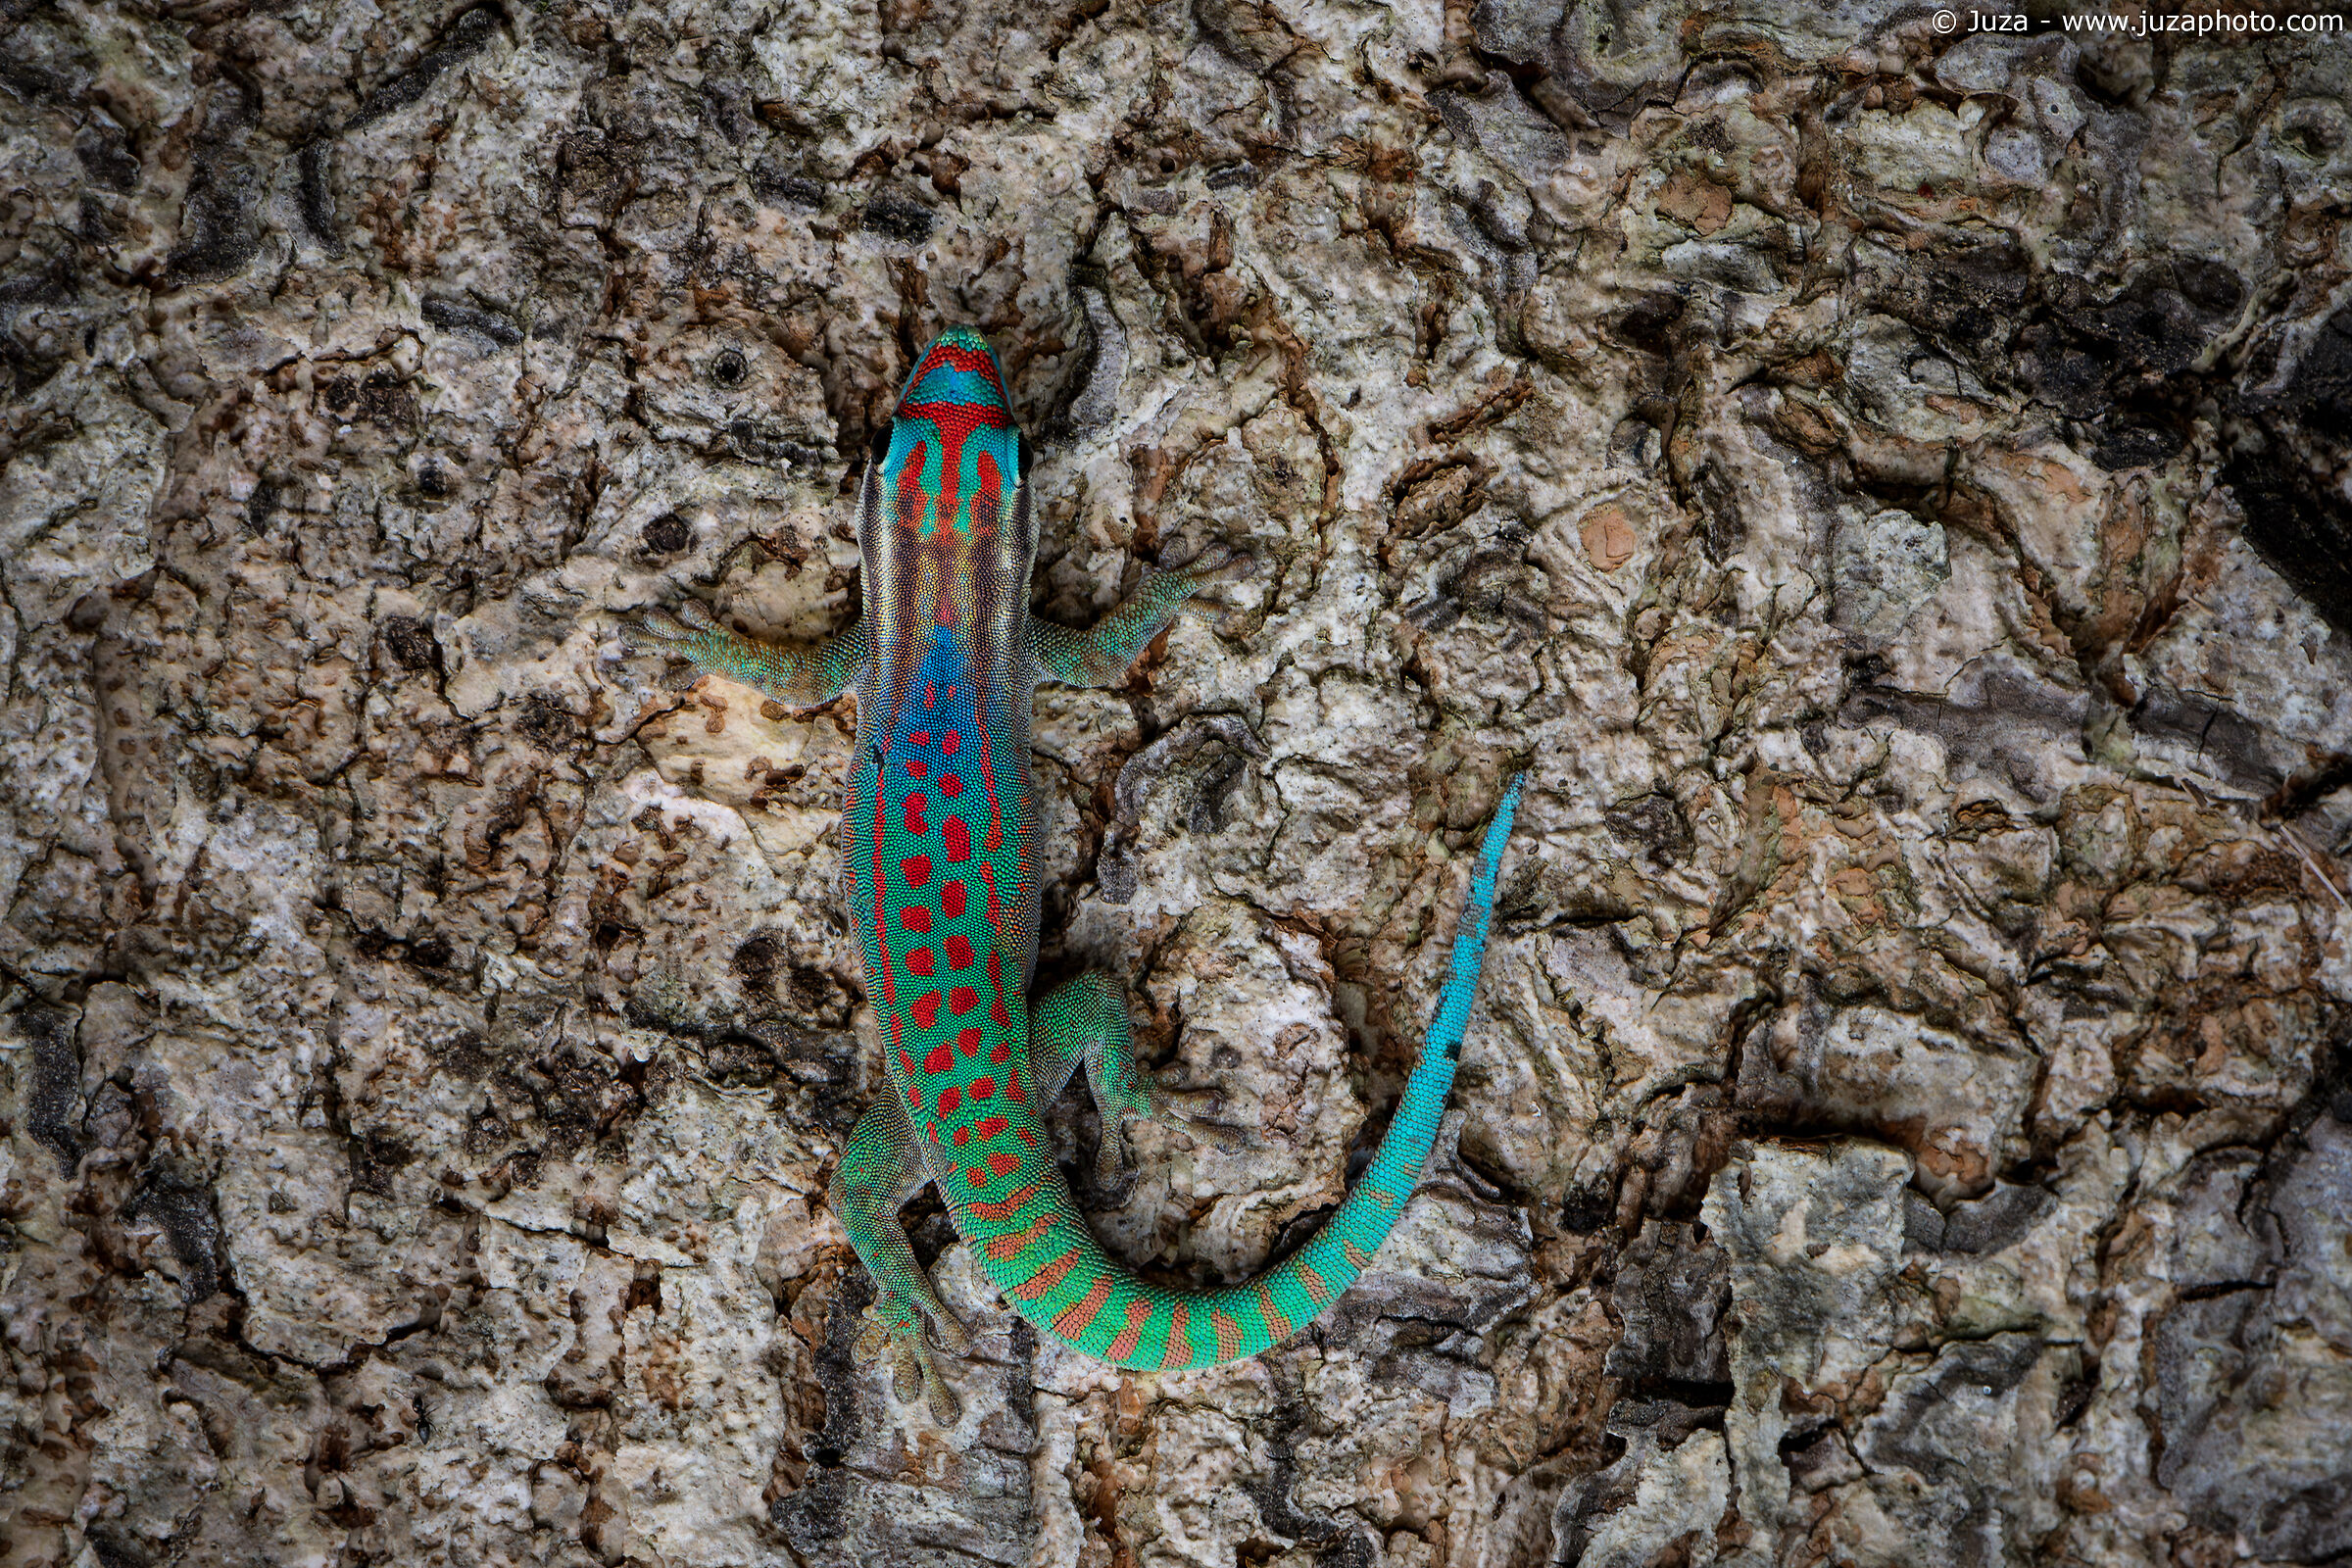 Ornate Day Gecko (Phelsuma ornata)...